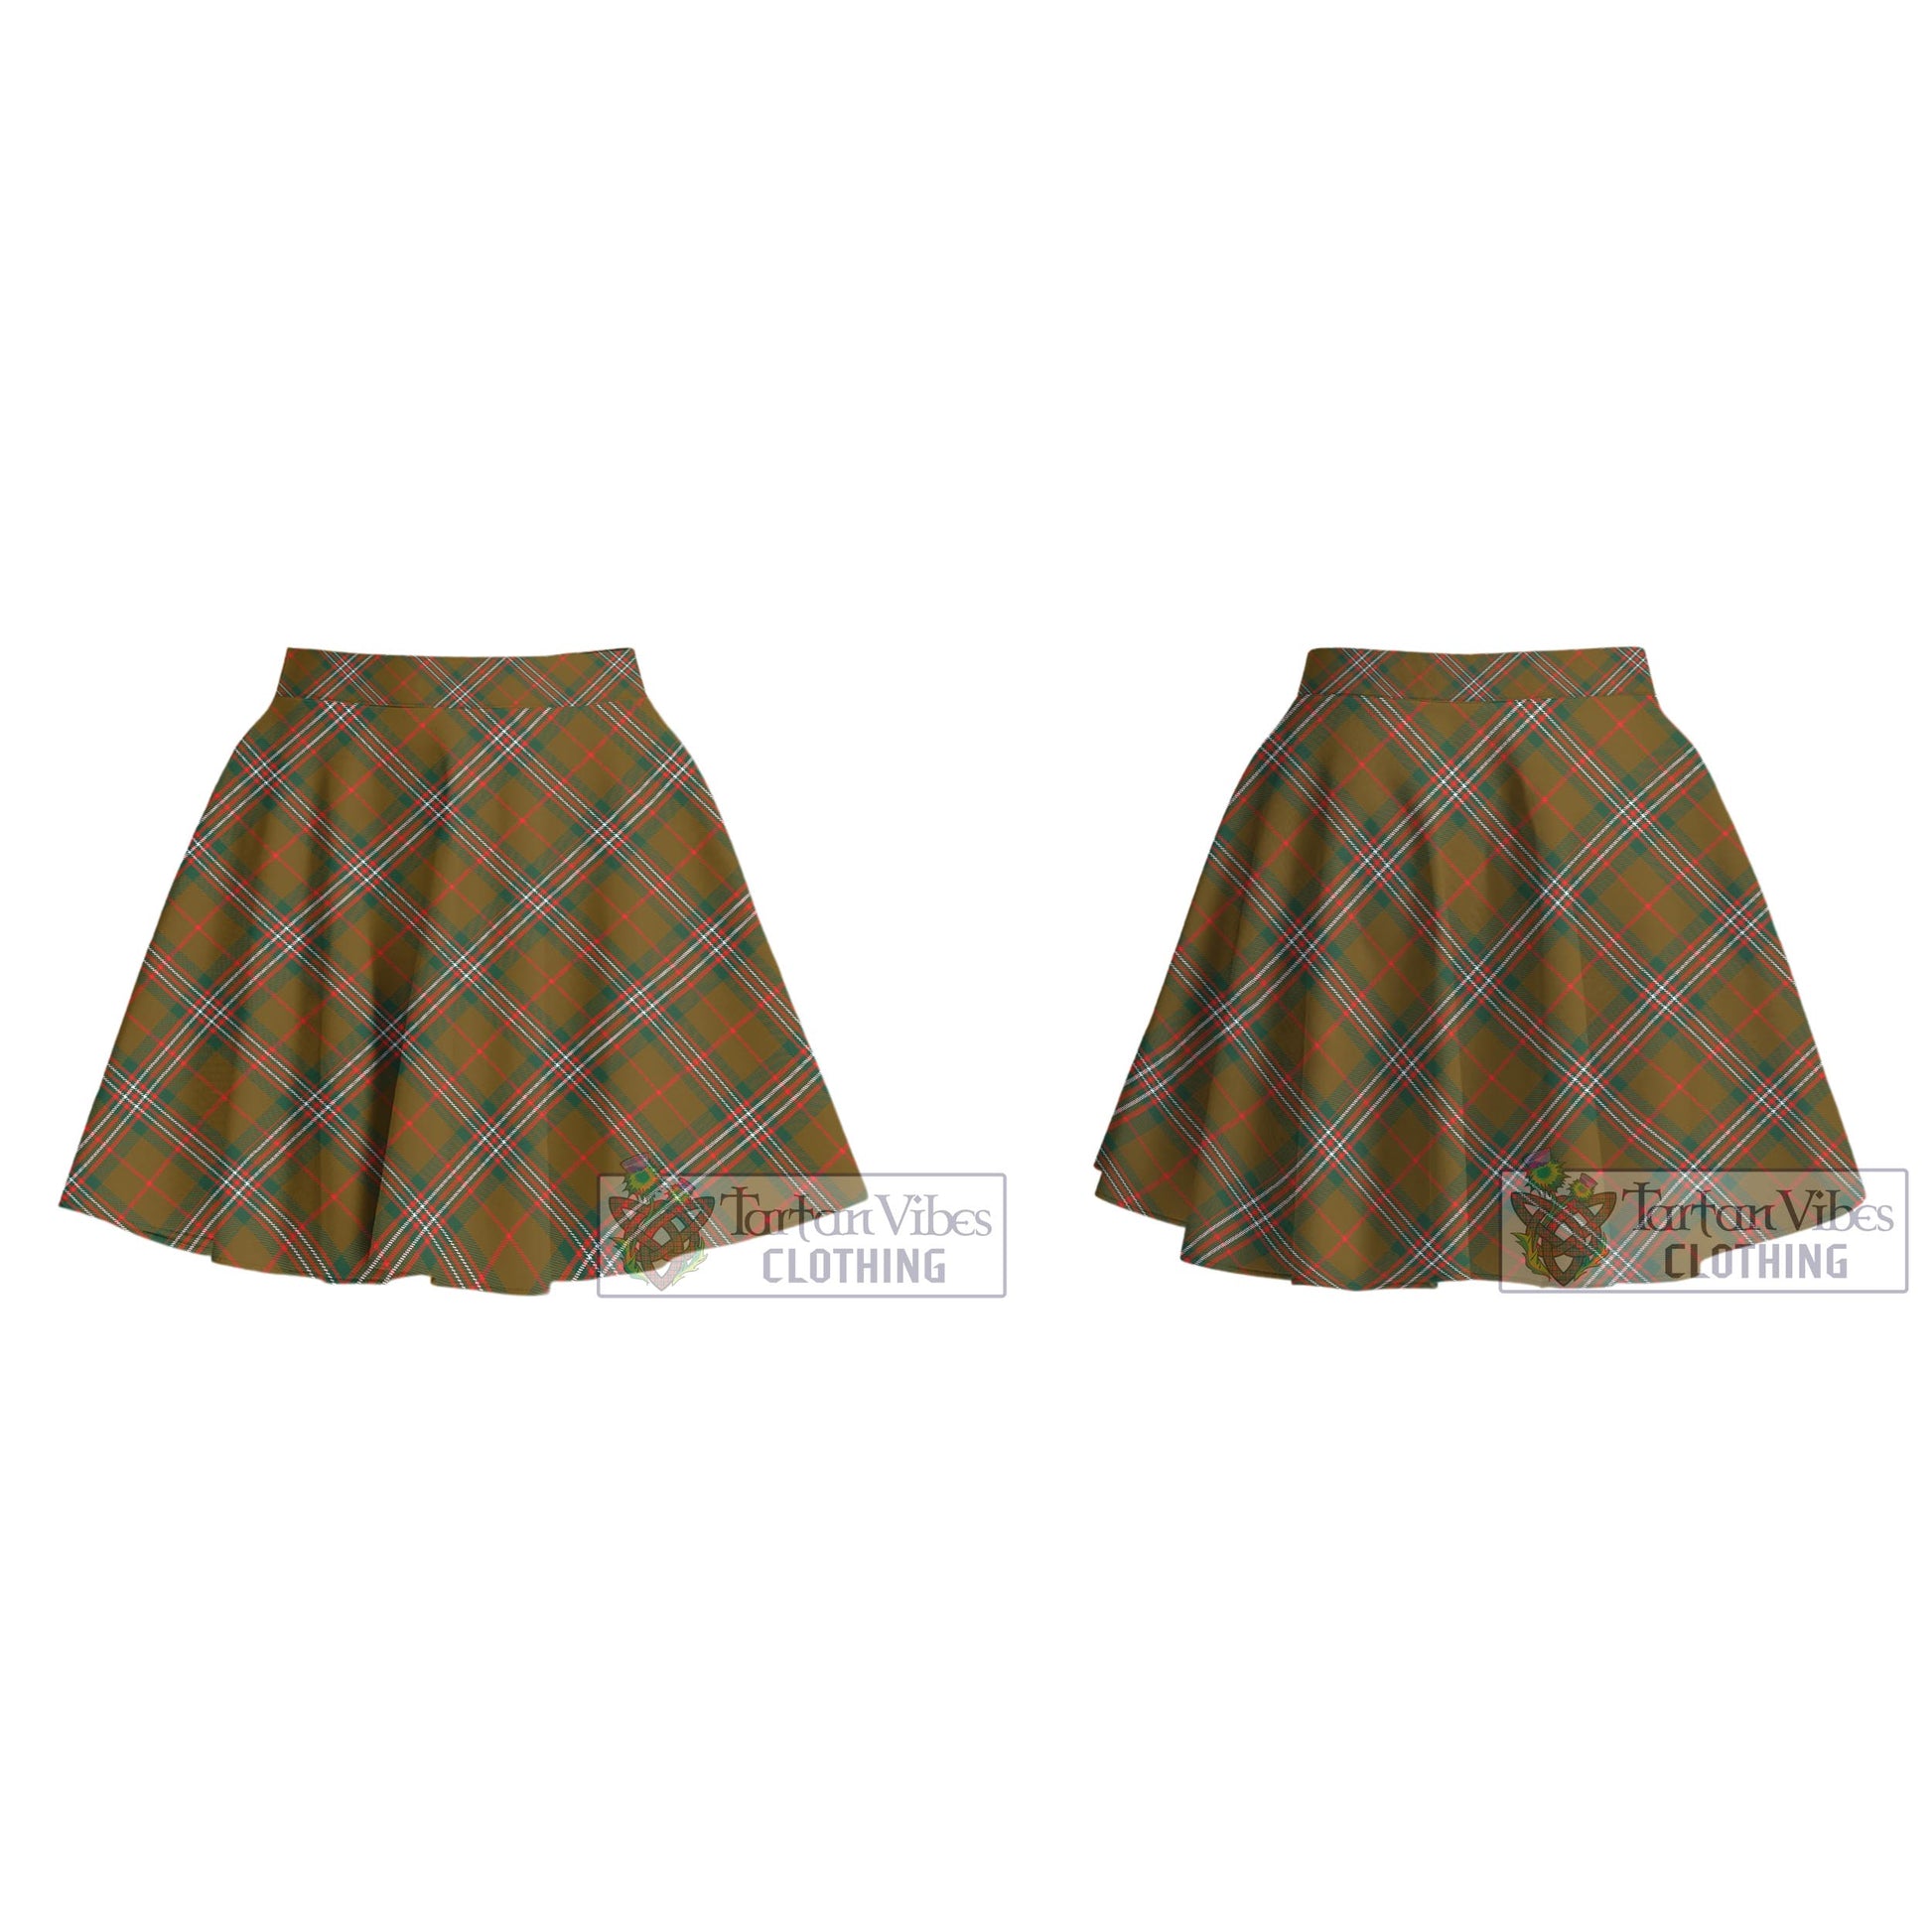 Tartan Vibes Clothing Scott Brown Modern Tartan Women's Plated Mini Skirt